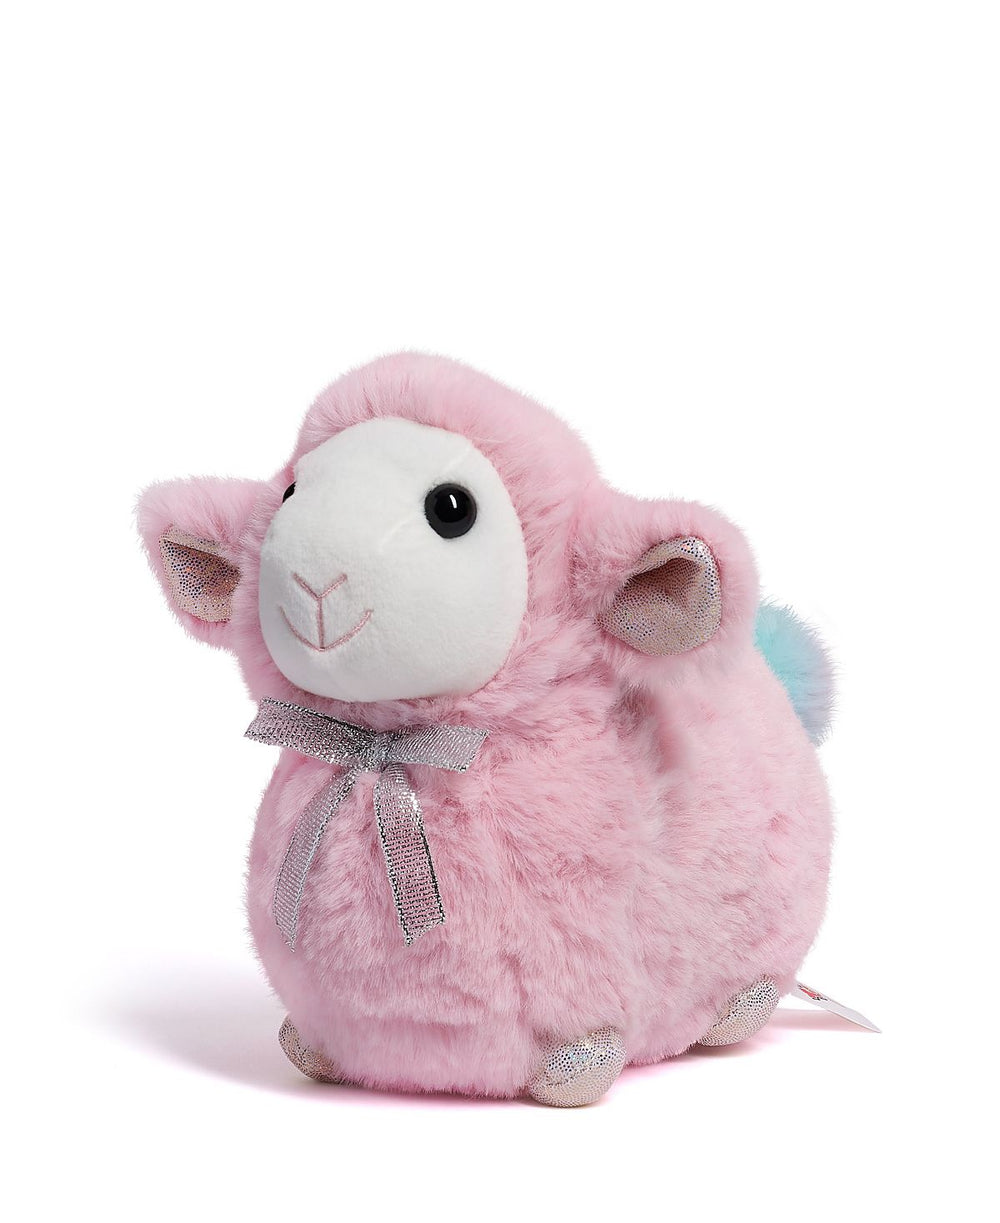 Geoffrey's Toy Box 9-inch Glam Lamb Plush - Soft Pink